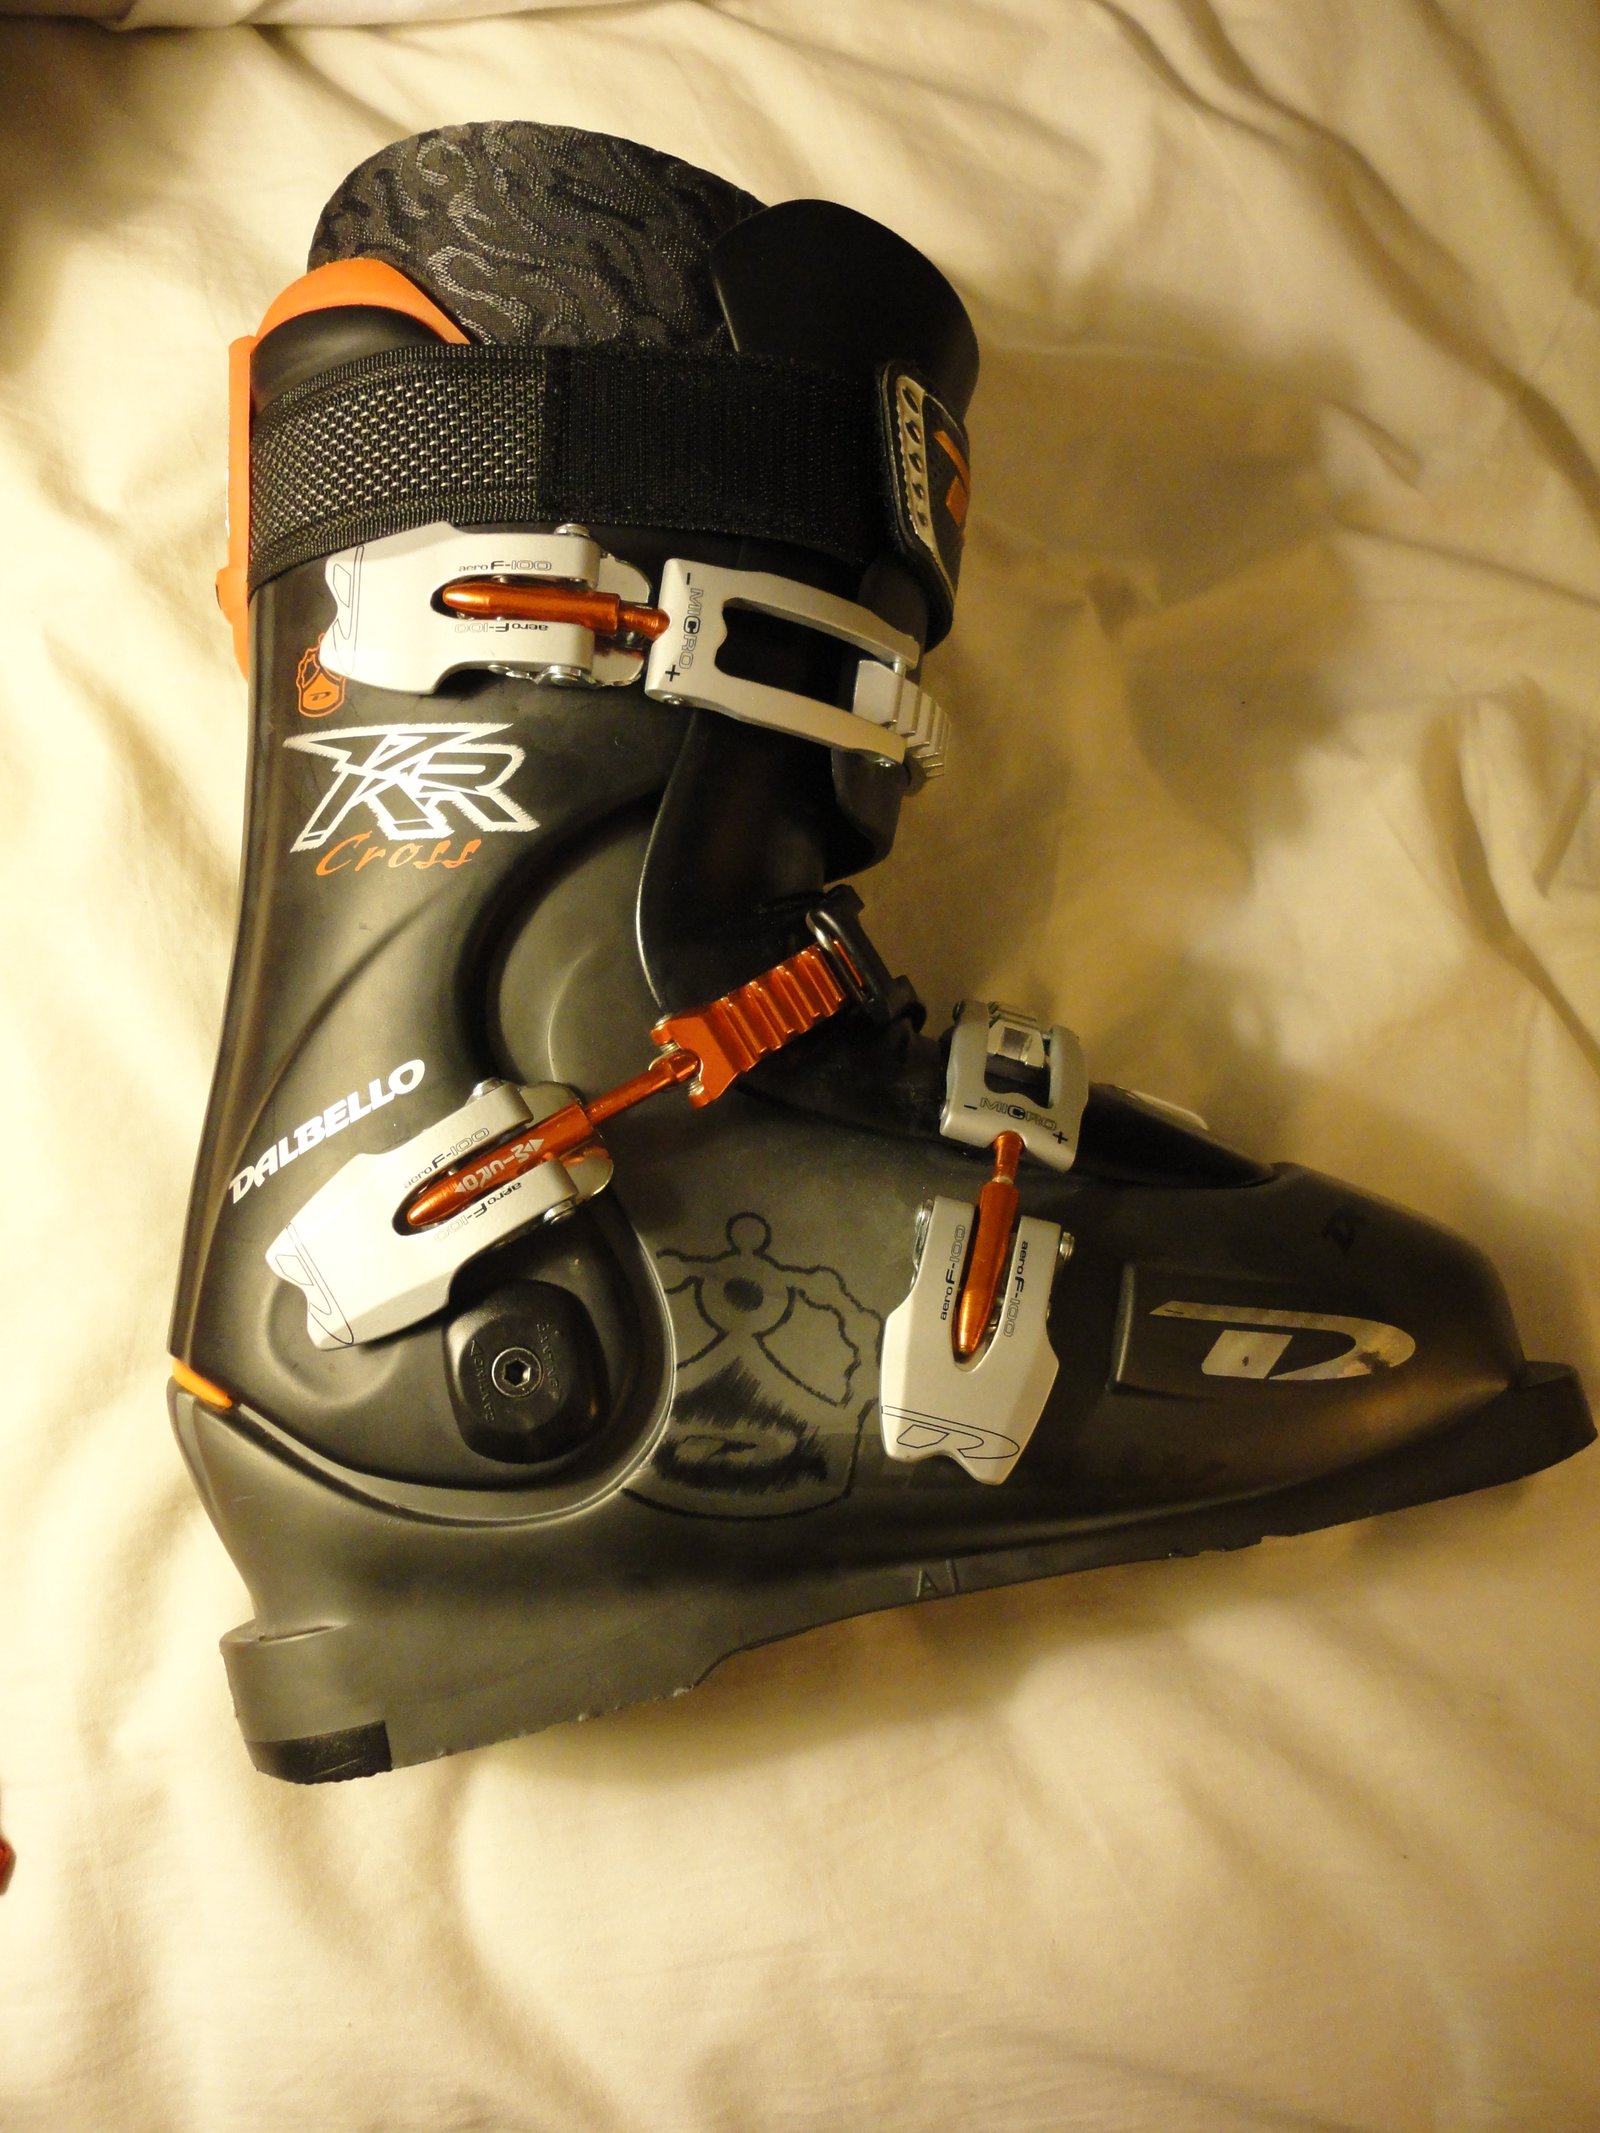 2010 Dalbello Krypton Cross Ski Boots